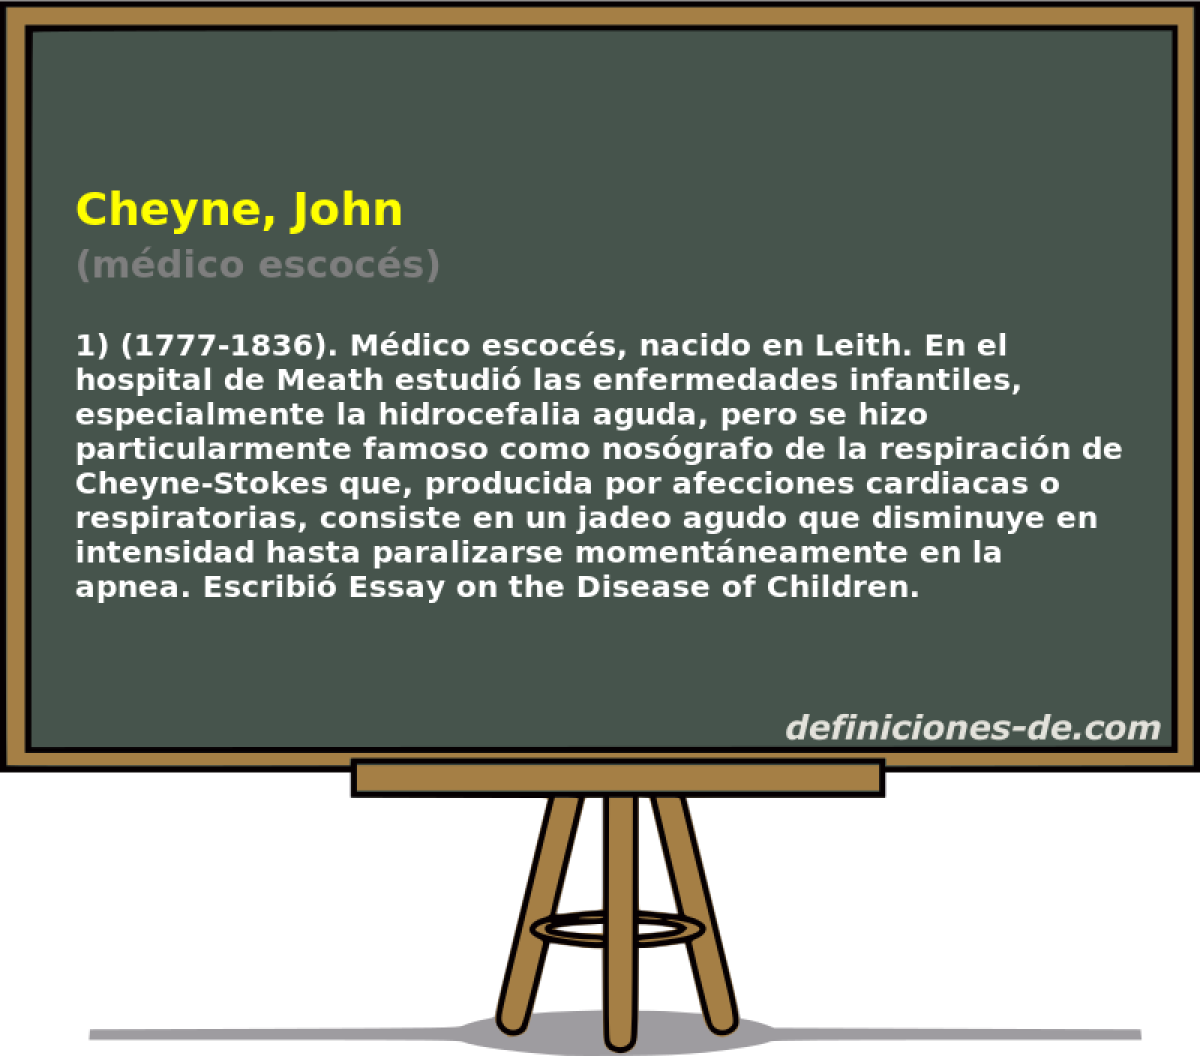 Cheyne, John (mdico escocs)